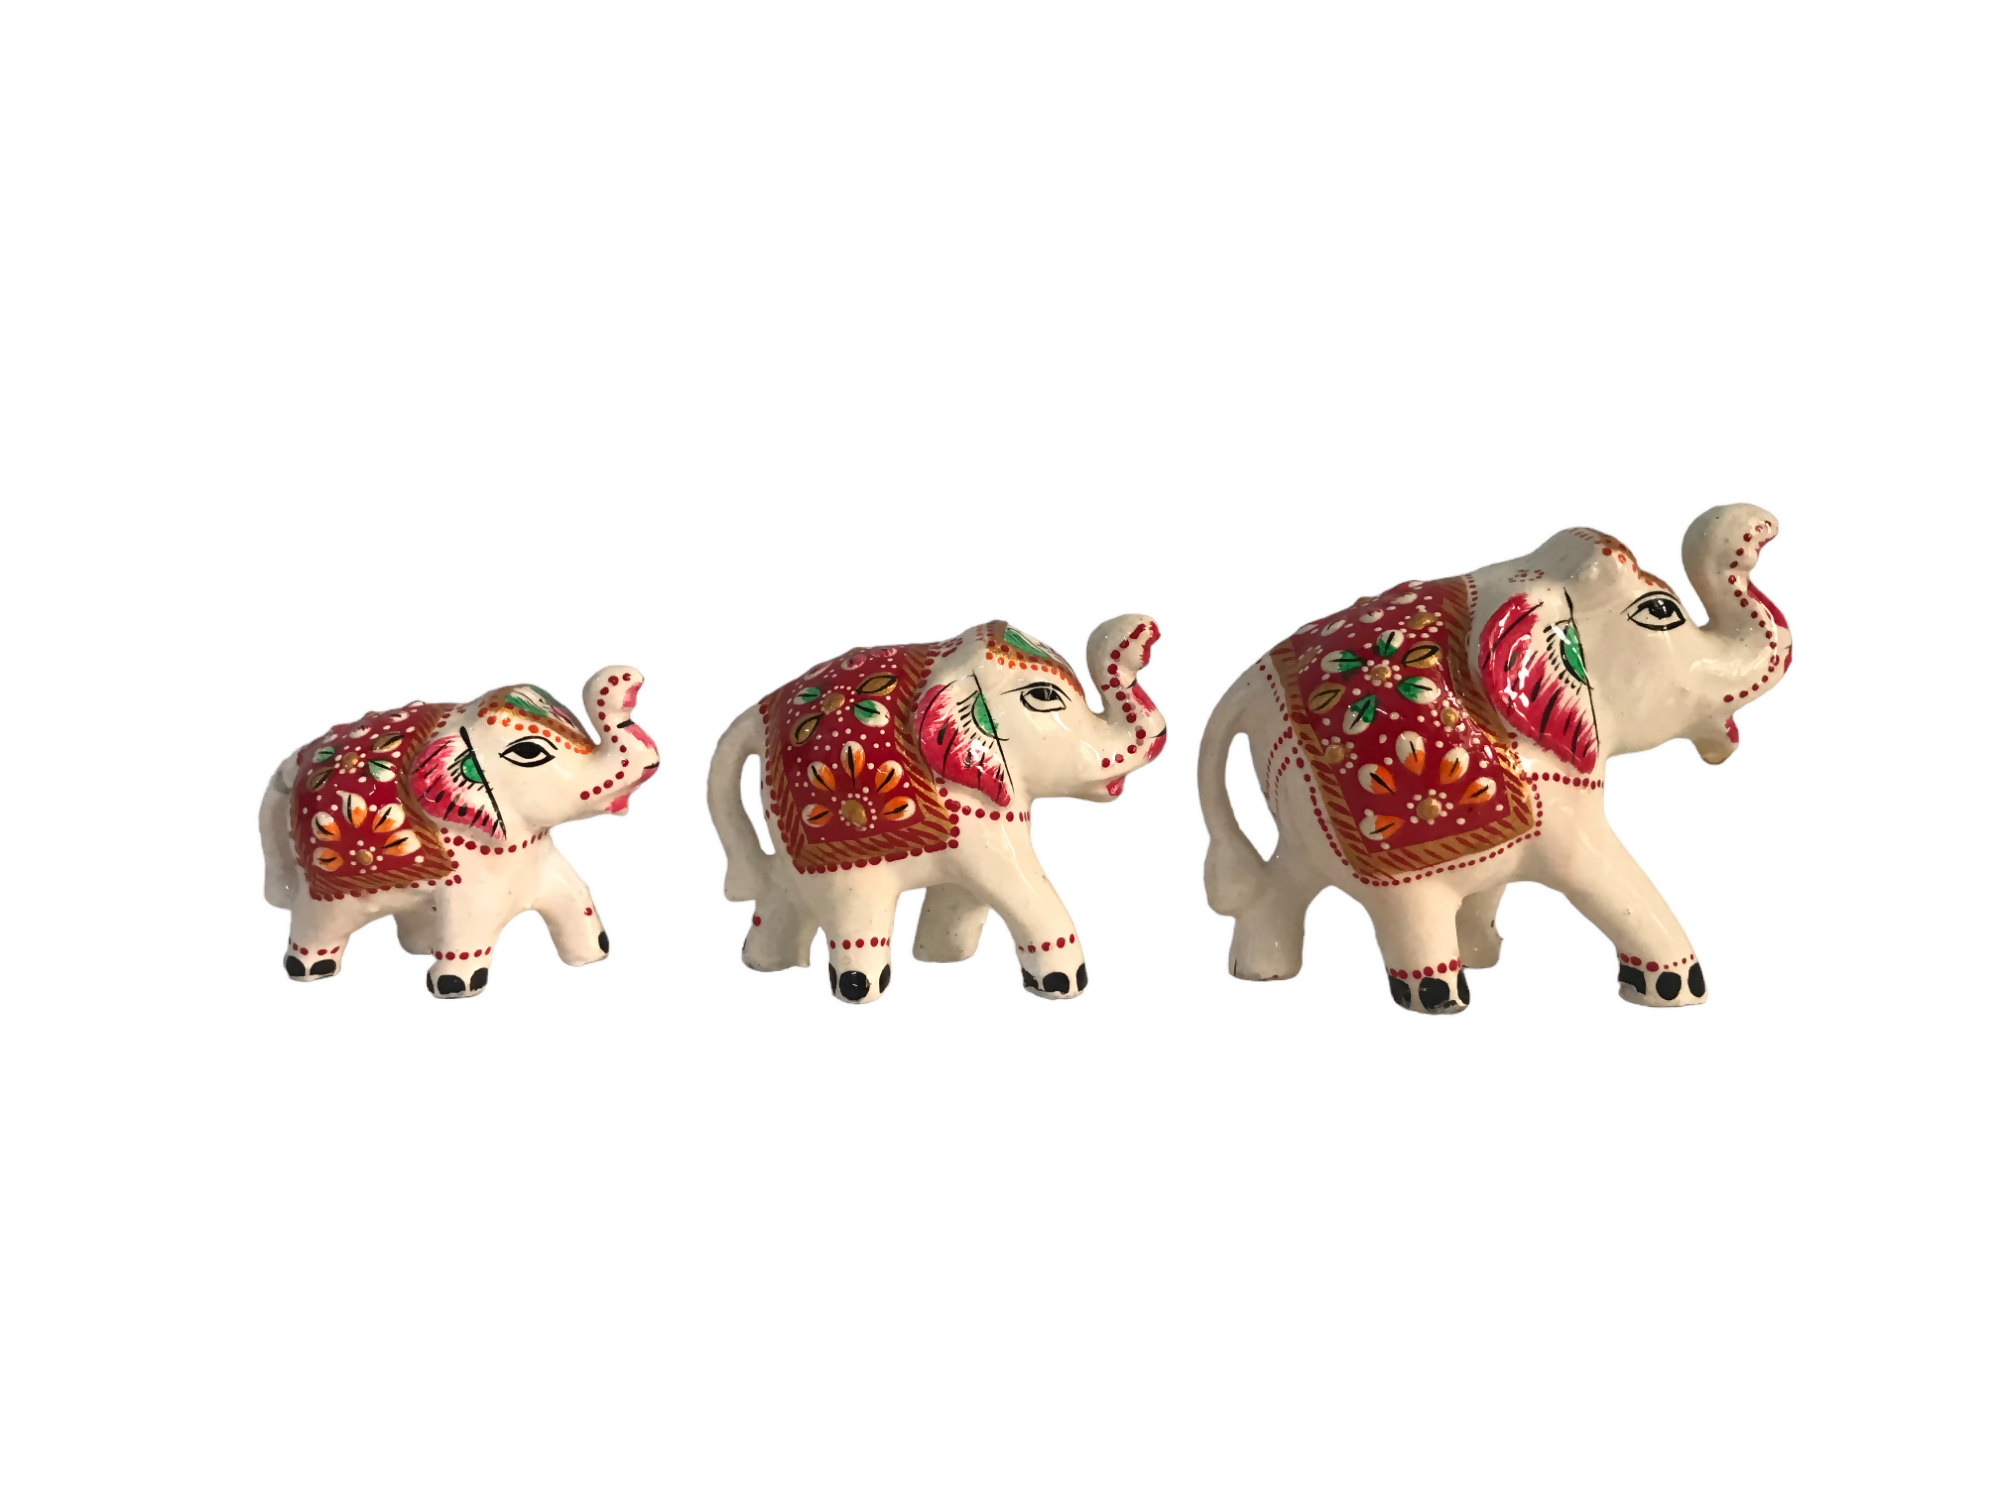 Wooden Decorative Elephants with Meenakari